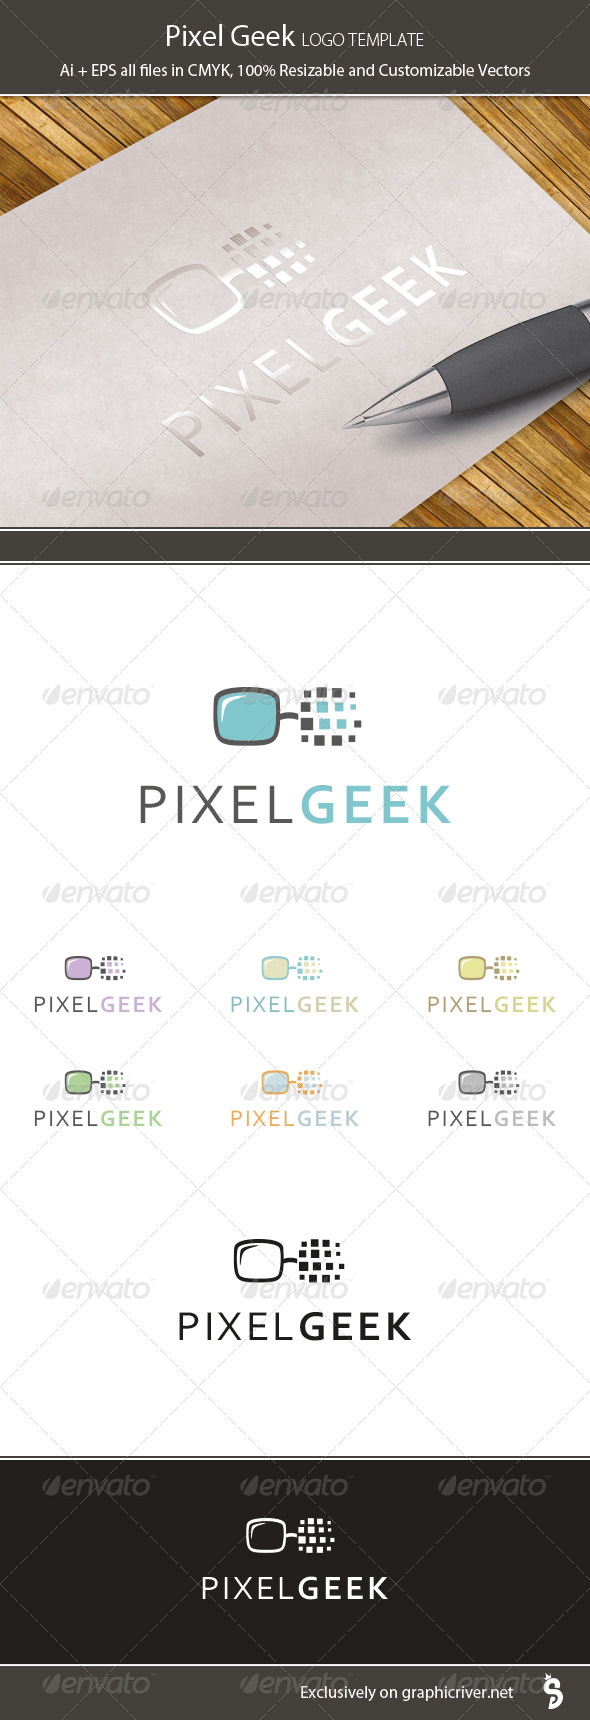 Pixel Geek - Logo Template